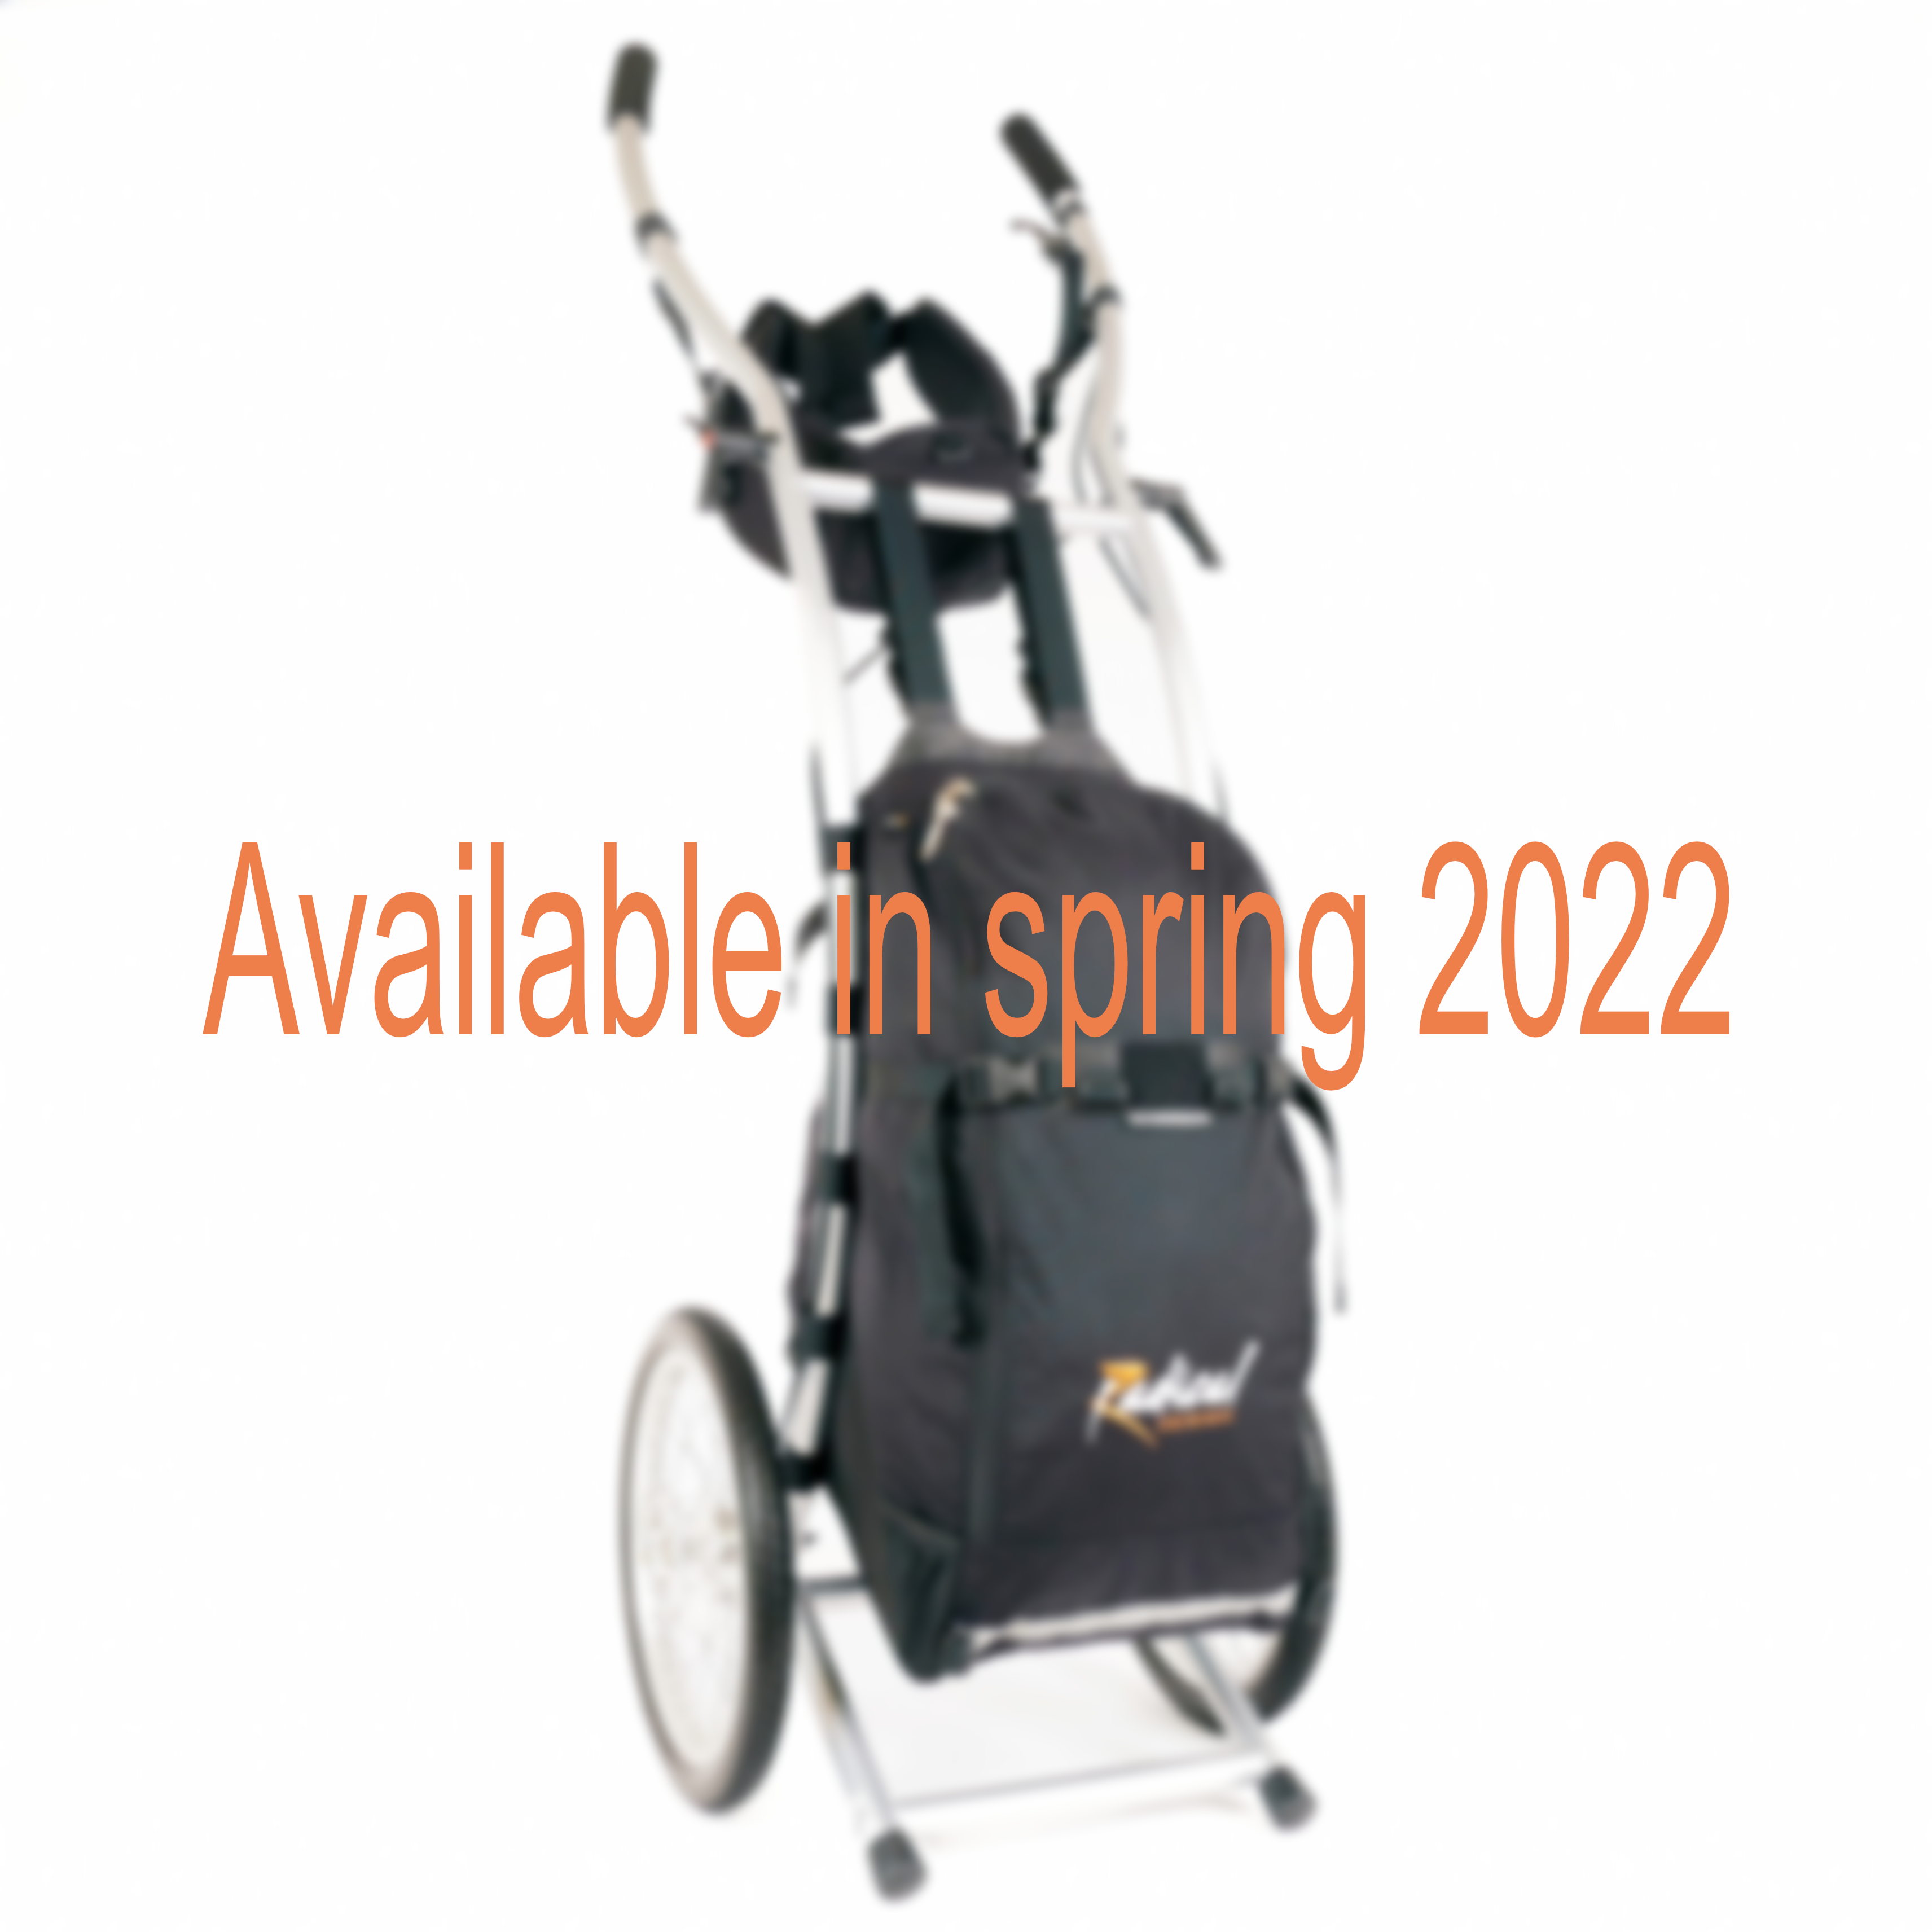 21056 wheelie5 traveller HD braked walkingtrailer sold out